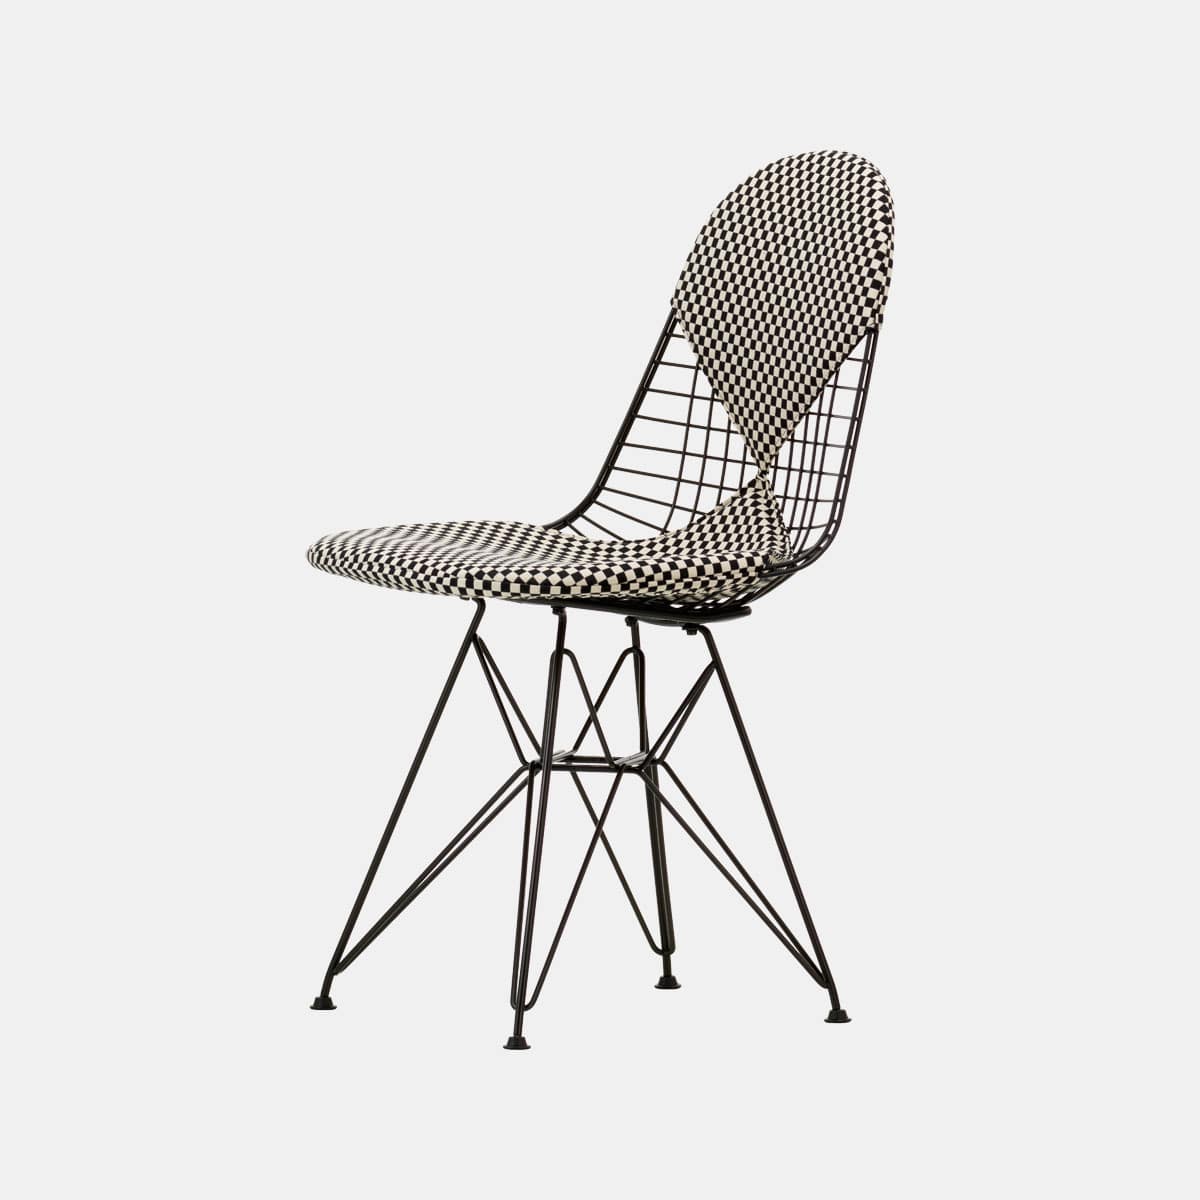 vitra-charles-ray-eames-wire-chair-dkr-2-checker-zwart-wit-basic-dark-001shop